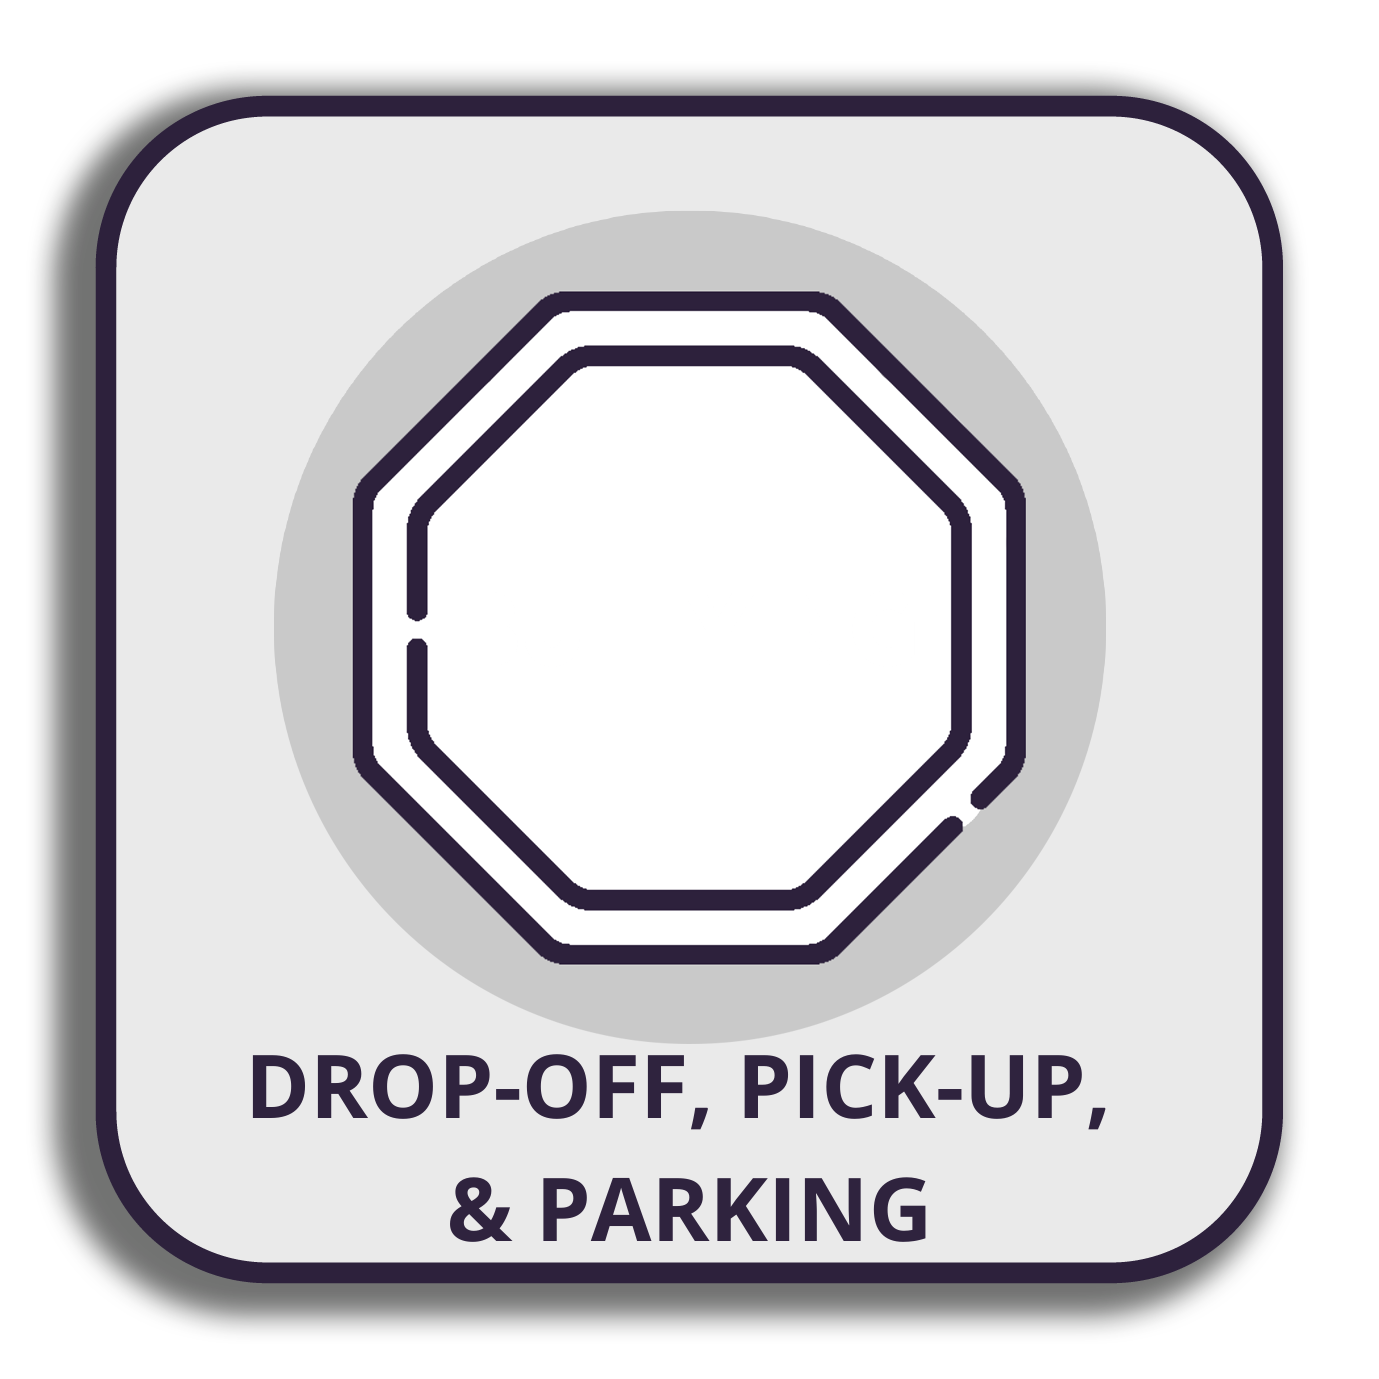 Drop-off, pick-up, & parking